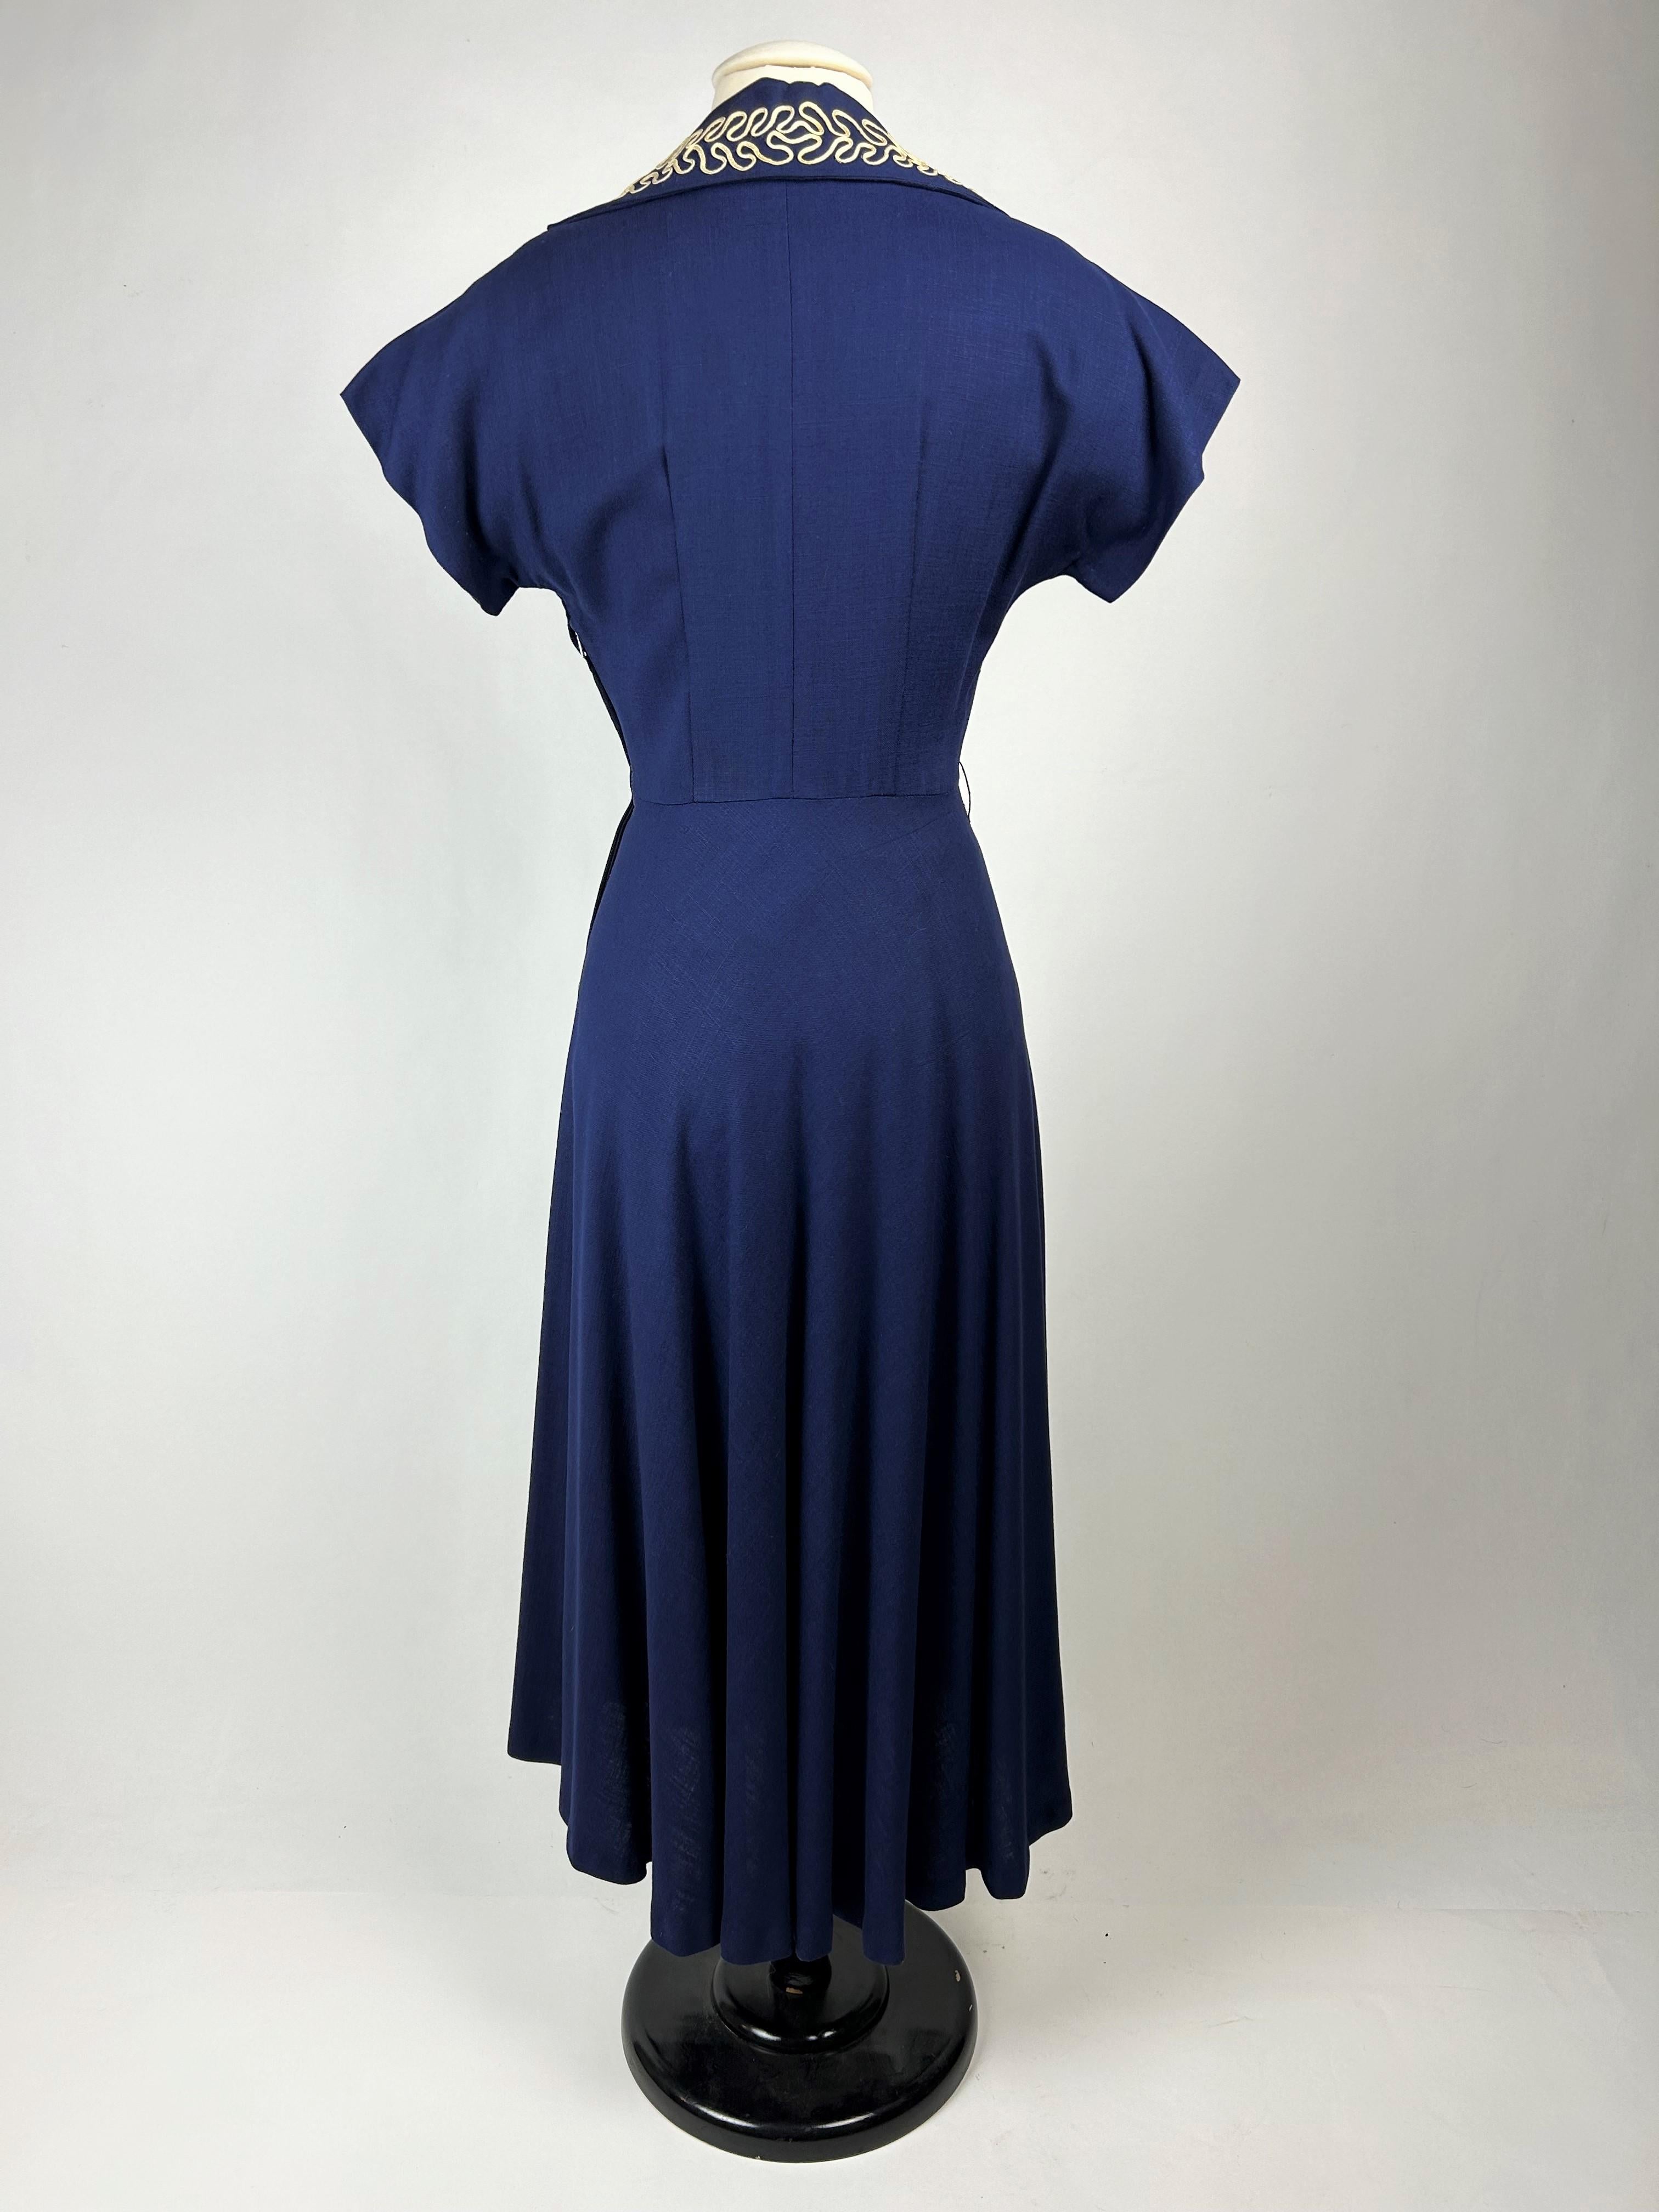 Robe de jour en tissu bleu marine avec applications de passepoils blancs Circa 1945-1950 en vente 11